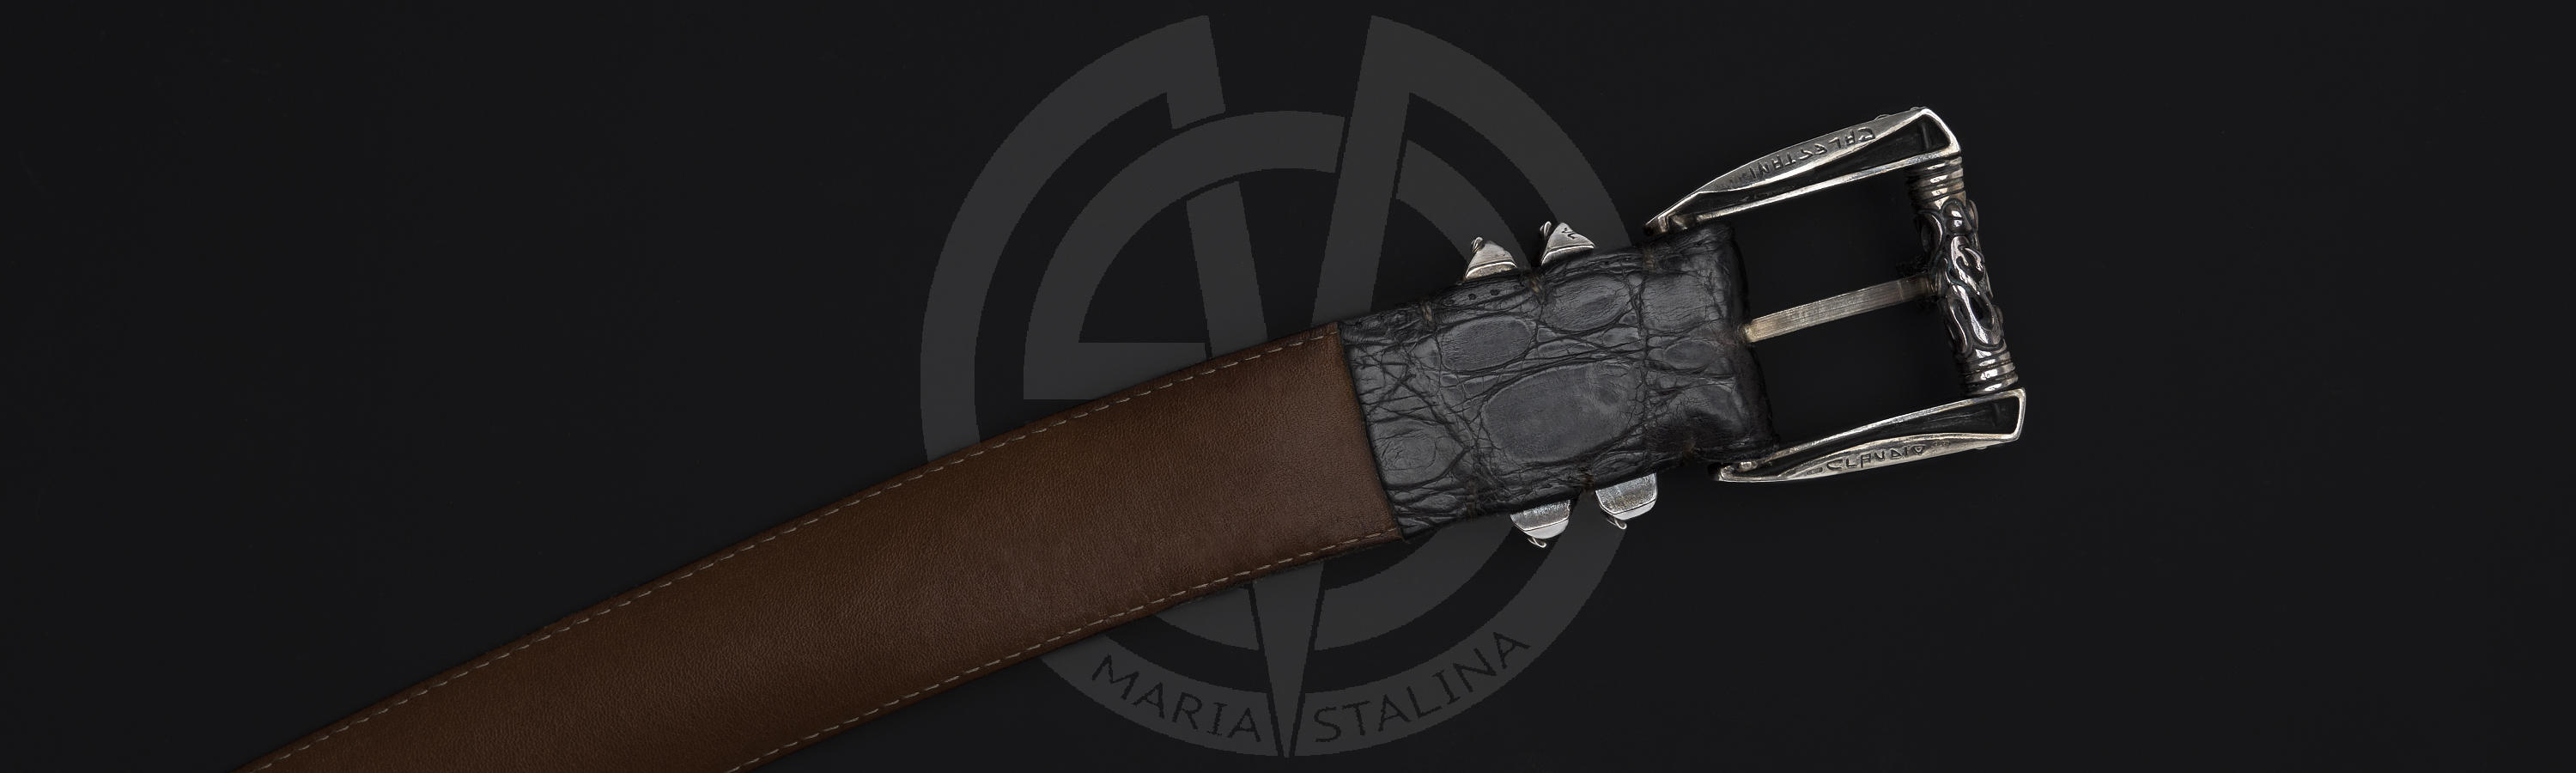 italian leather belt